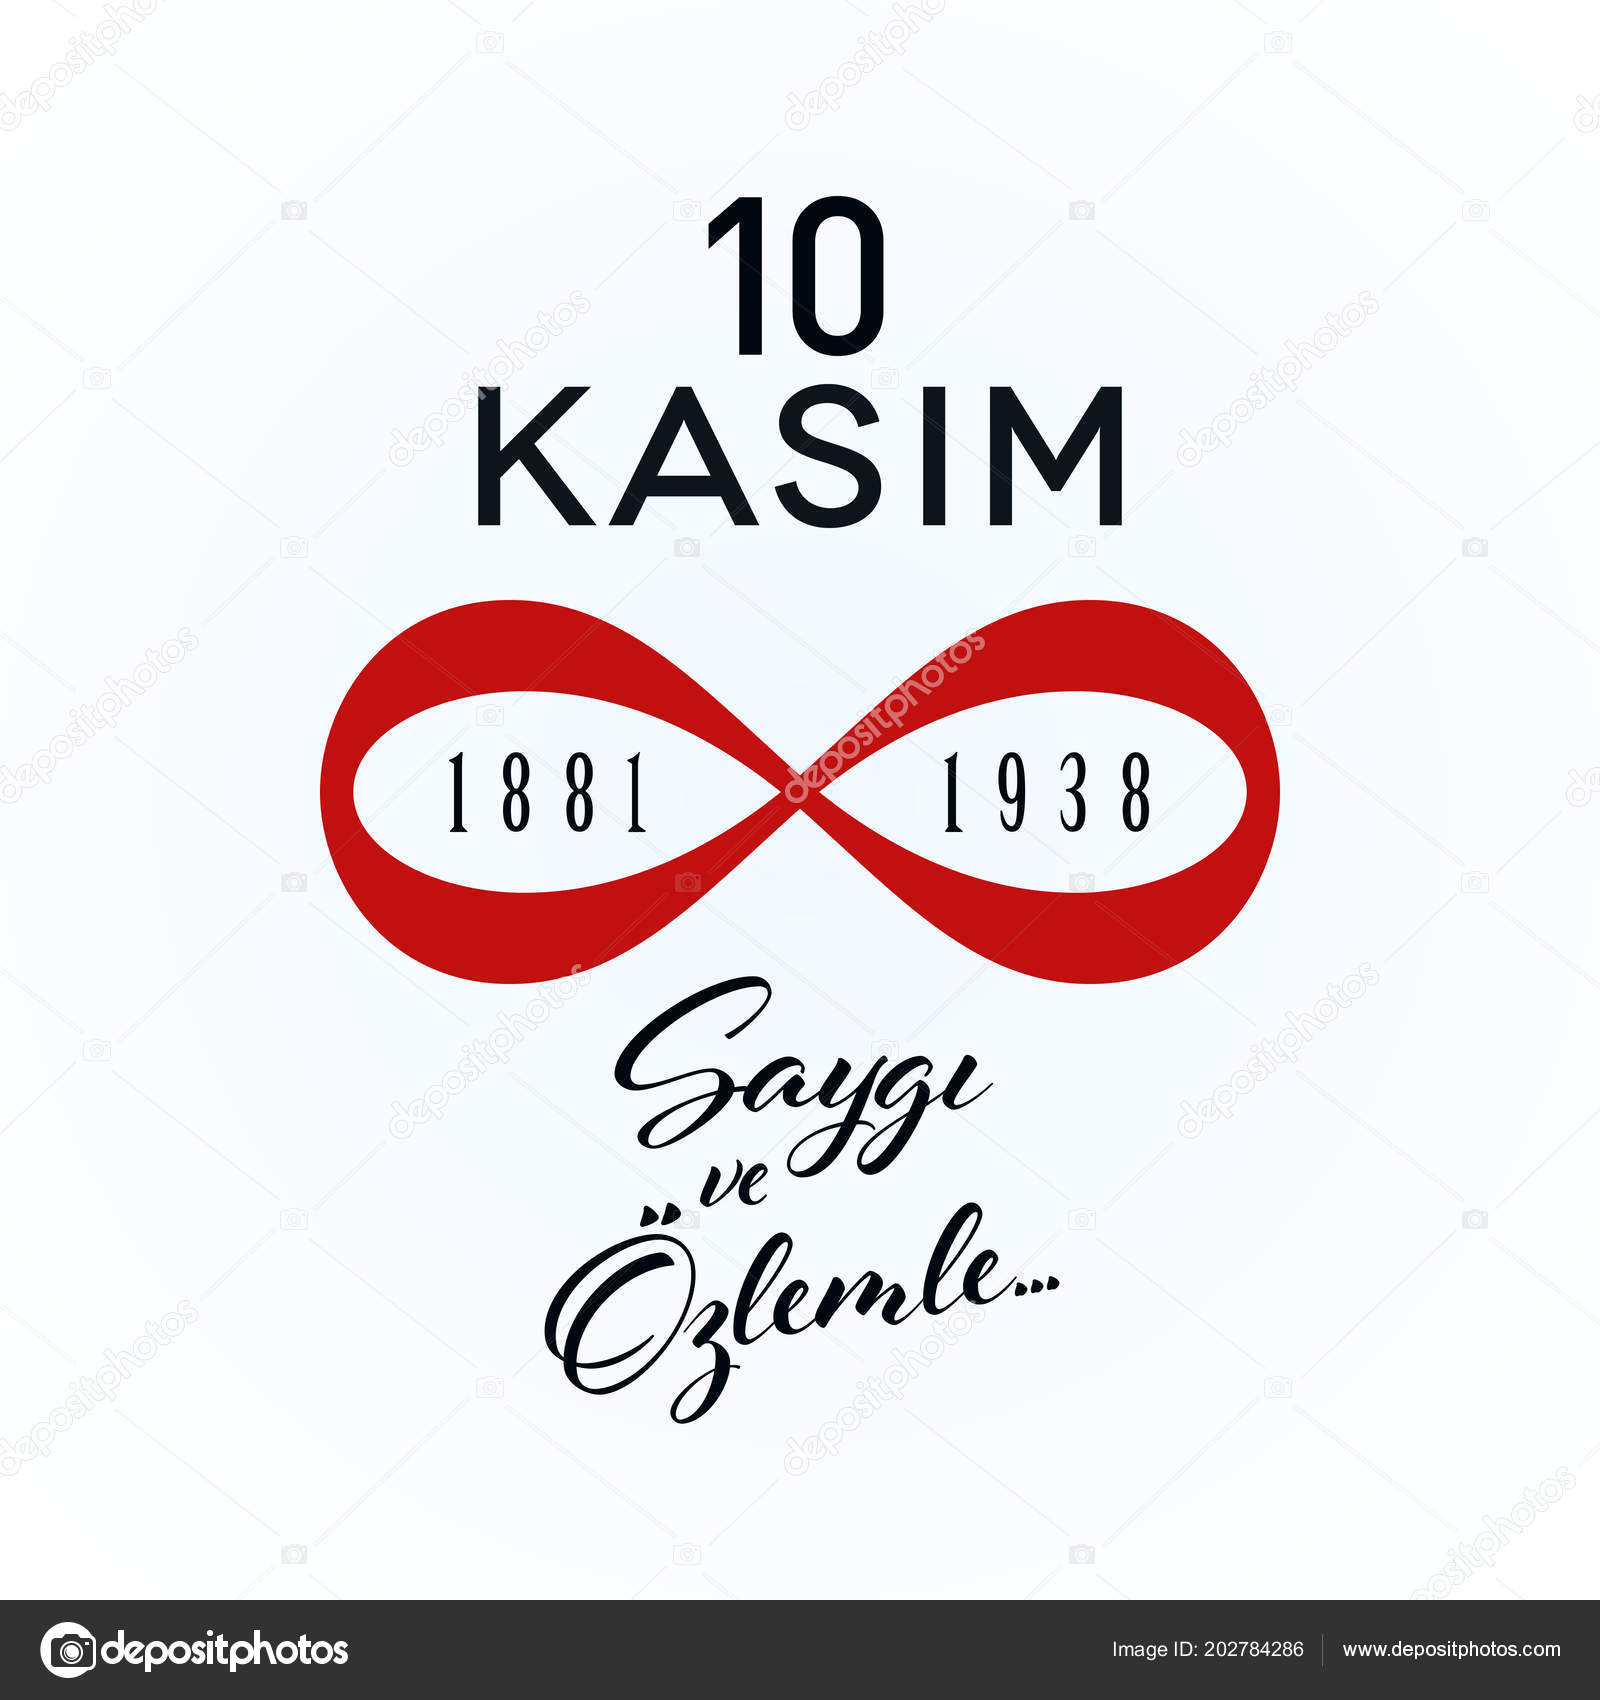 Kasim Saygi Ozlemle Memorial Day Ataturk November Concept Regarding Death Anniversary Cards Templates